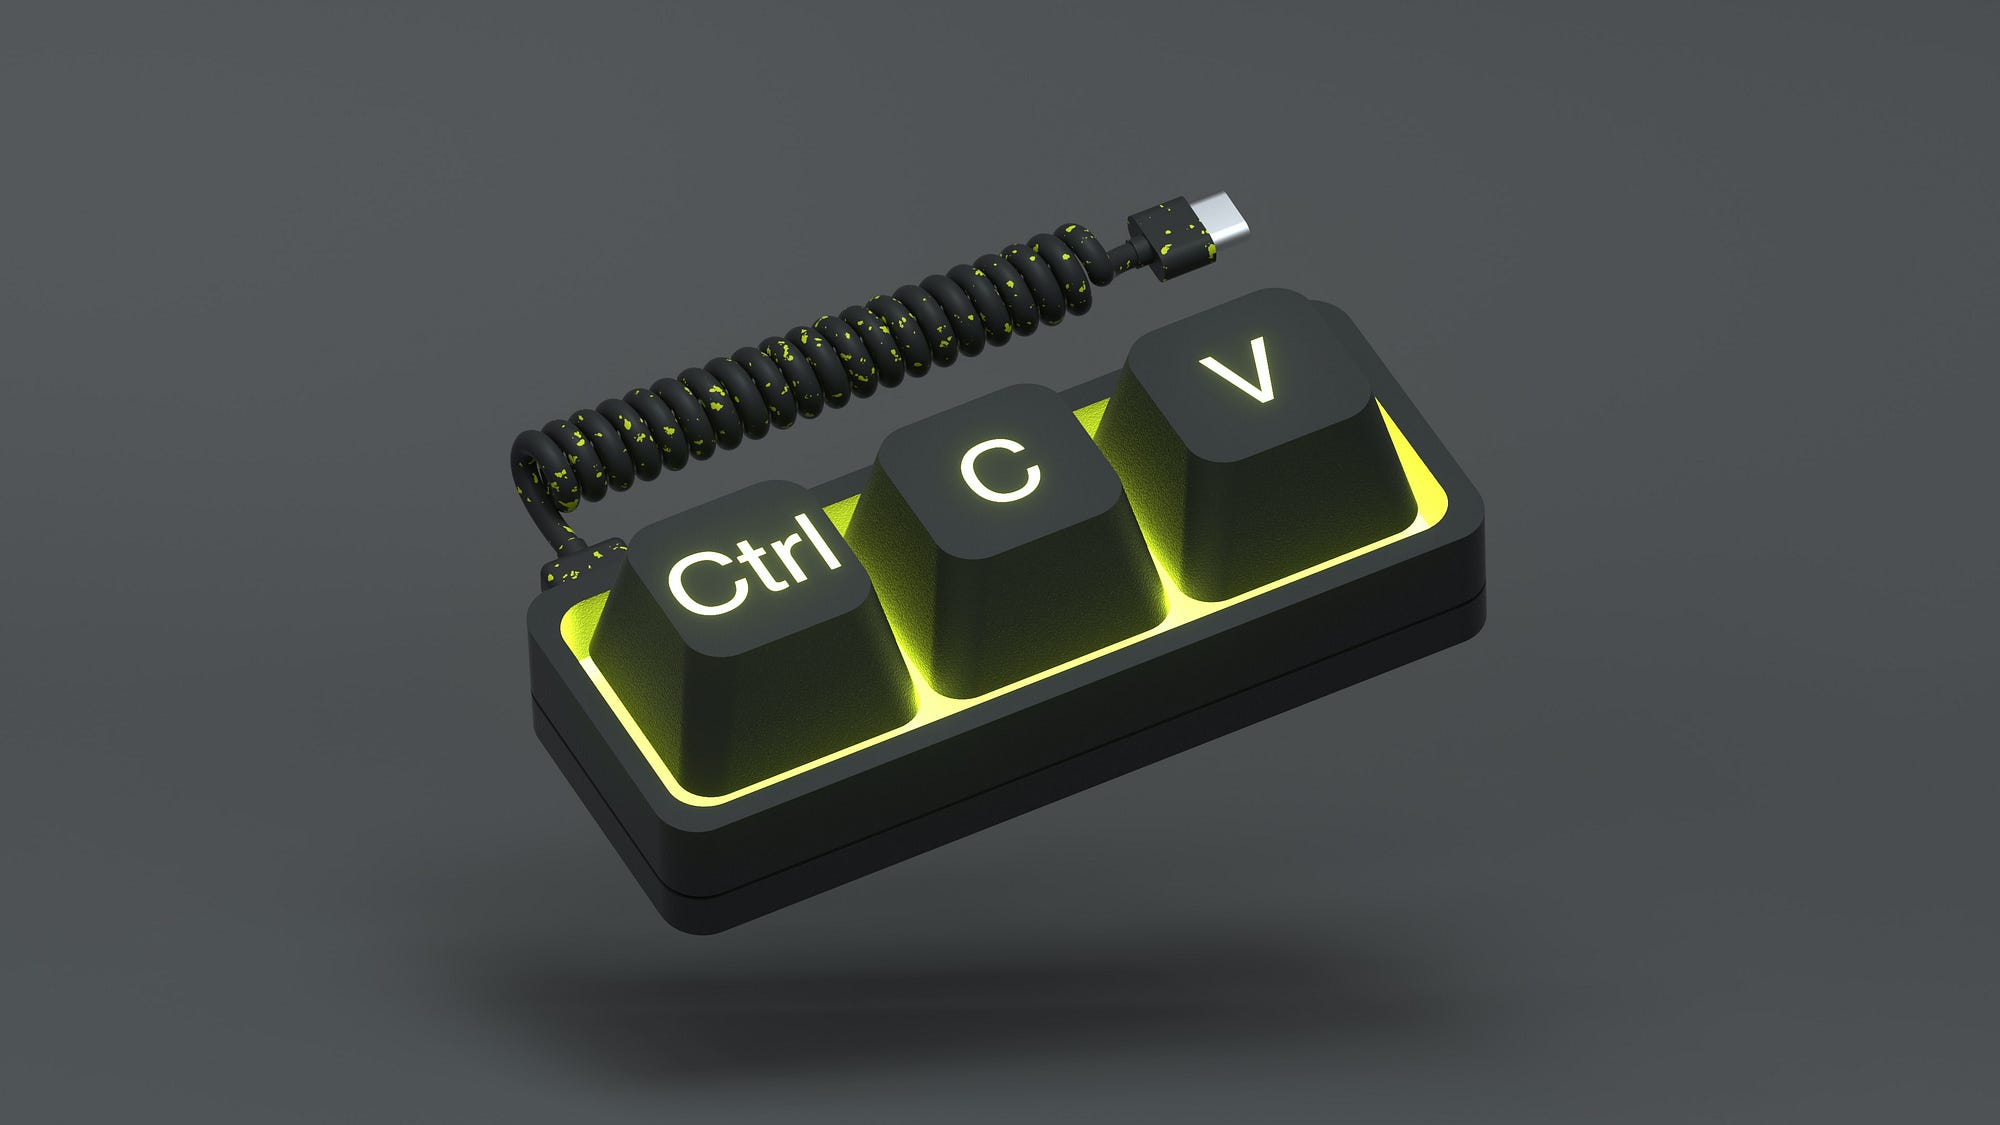 New Keybinds for Keyboard Navigation - Announcements - Developer